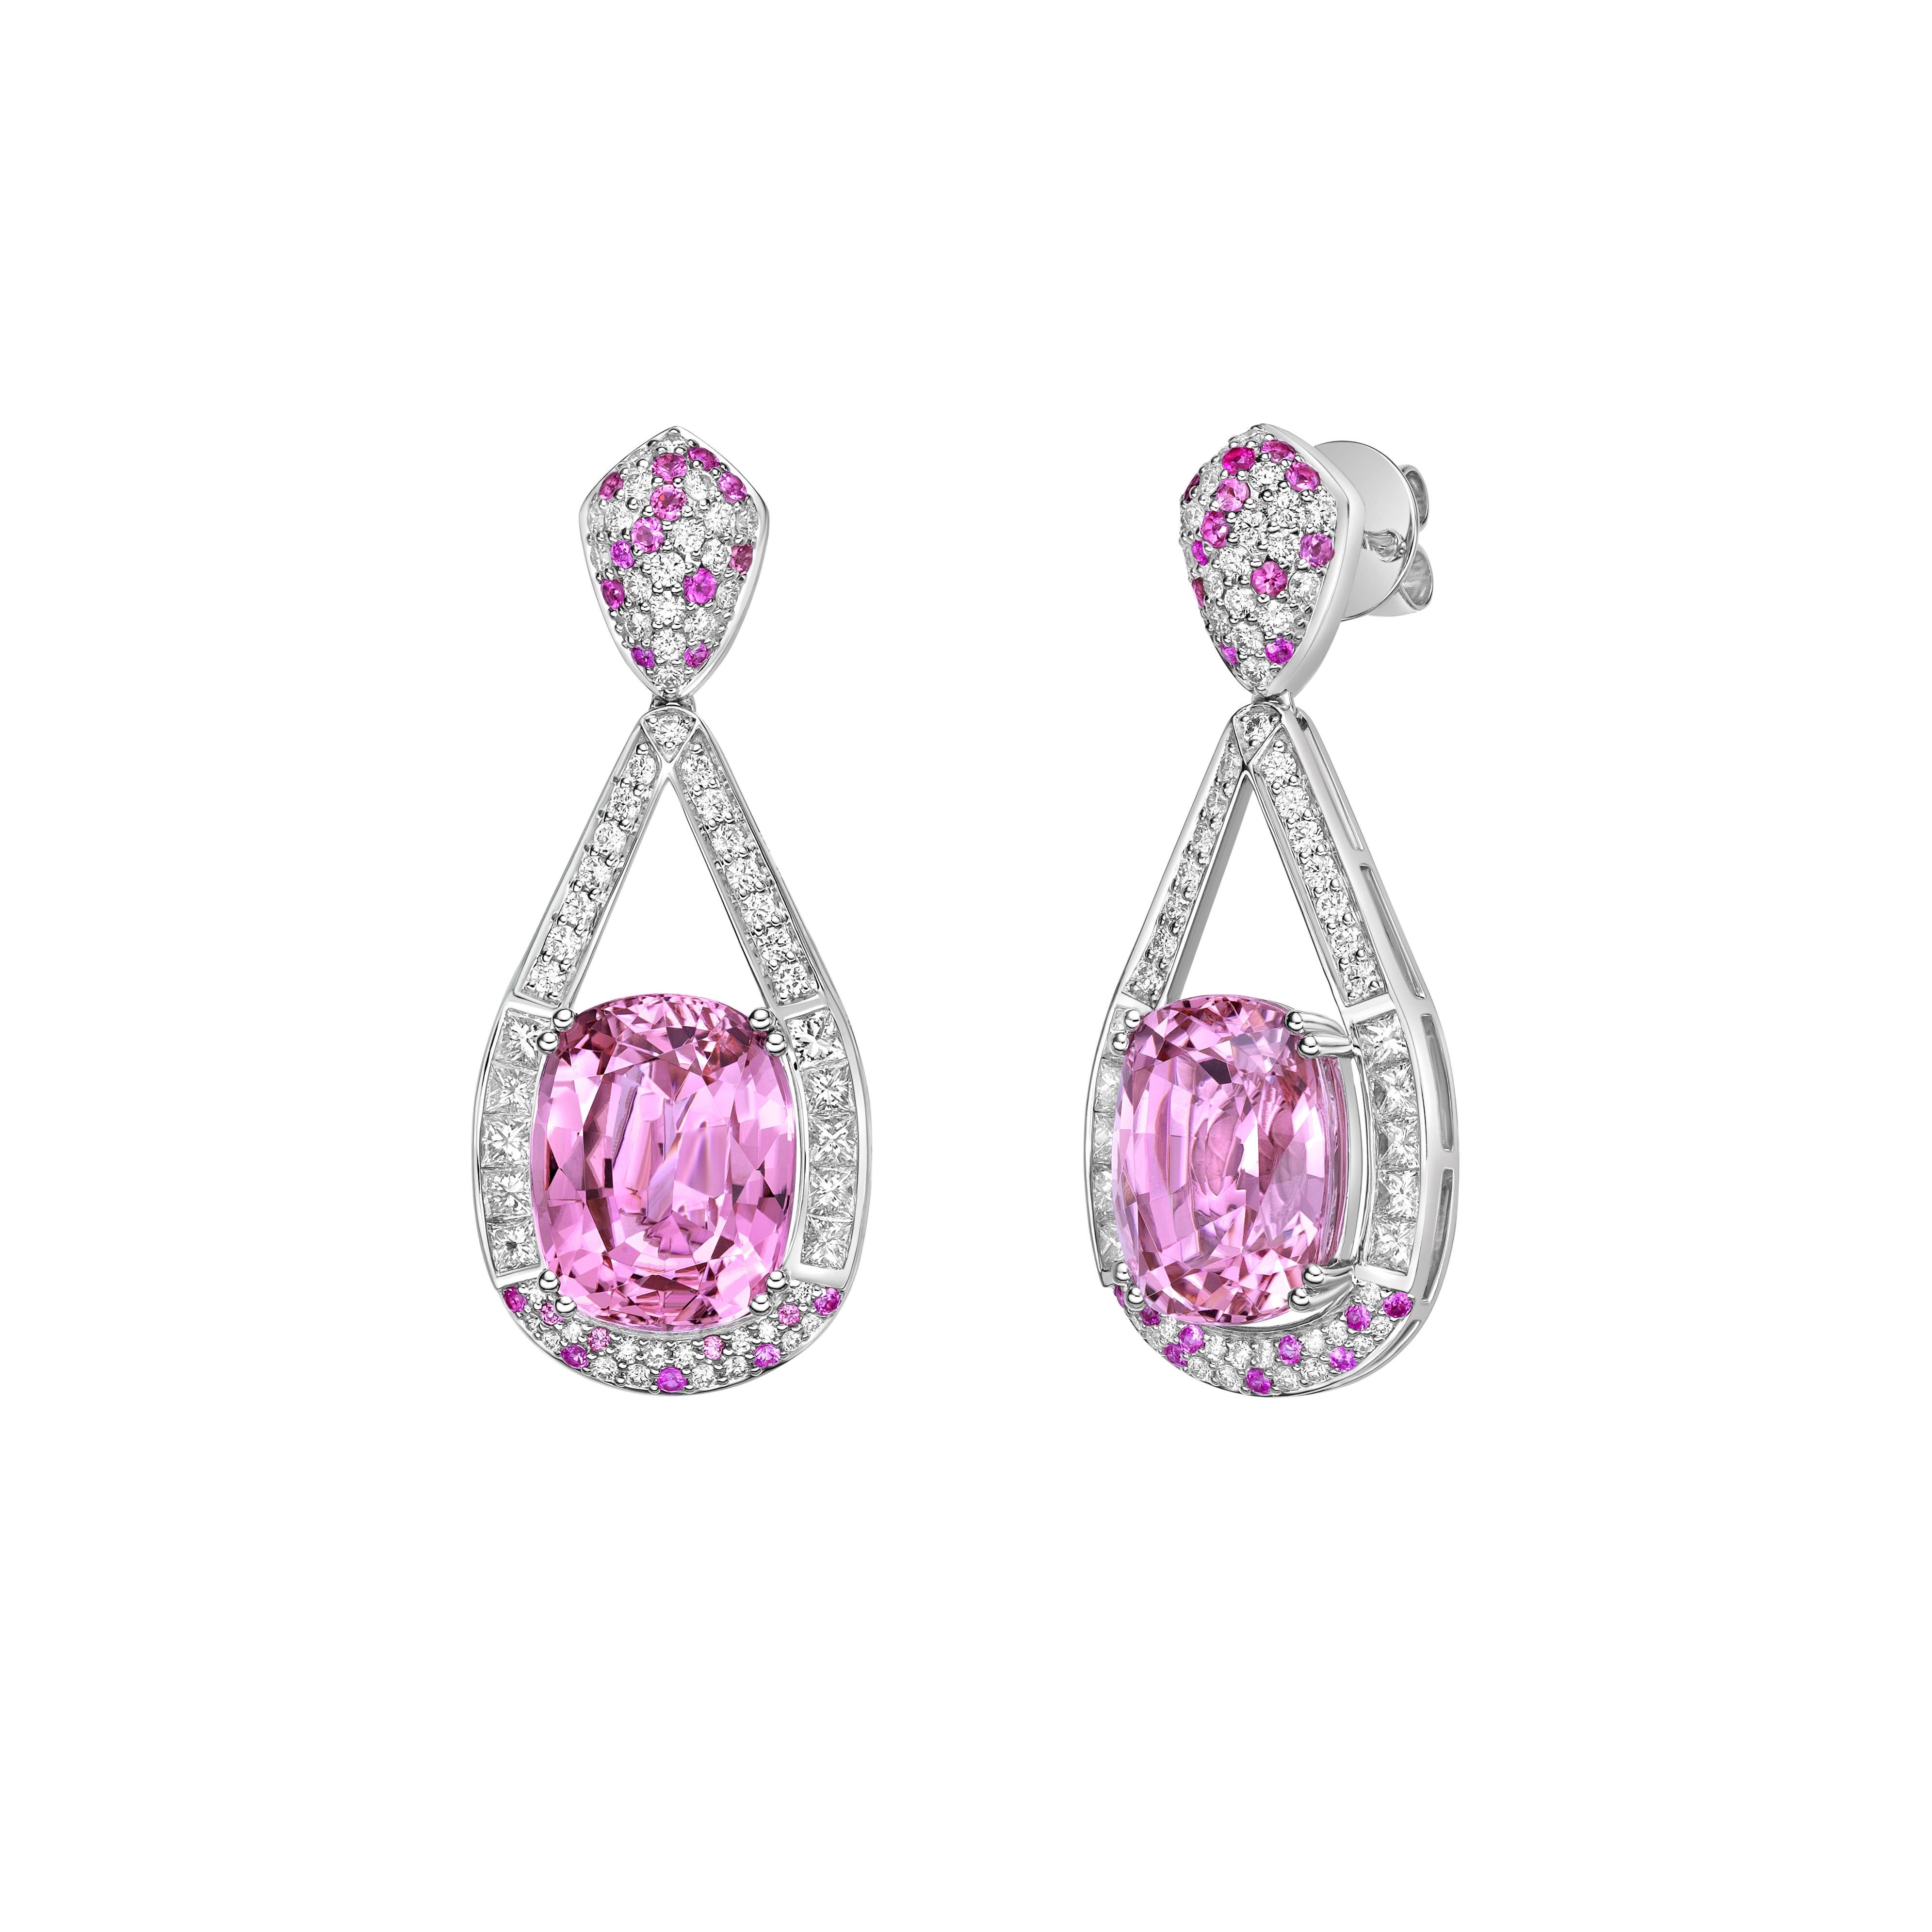 Cushion Cut 17.72 Carat Pink Tourmaline Drop Earrings in 18Karat White Gold with Diamond. For Sale